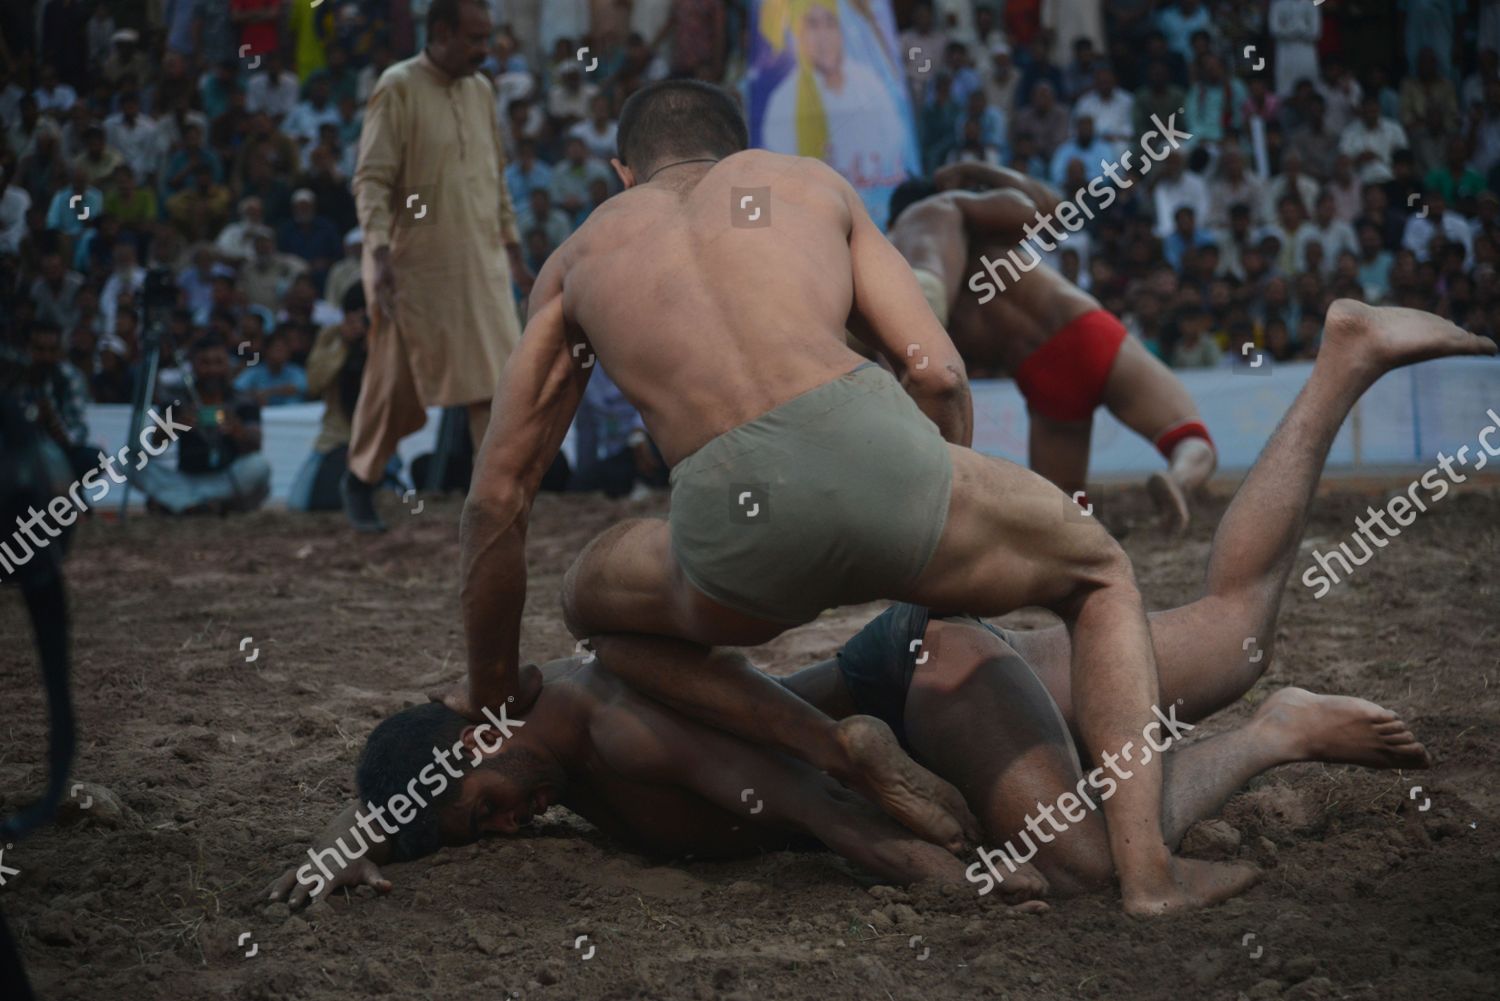 Kushti in Pakistan Wrestling | Pakistan Travel & Culture Life in Pakistan |  Sports photograph, Sports photos, Fun sports